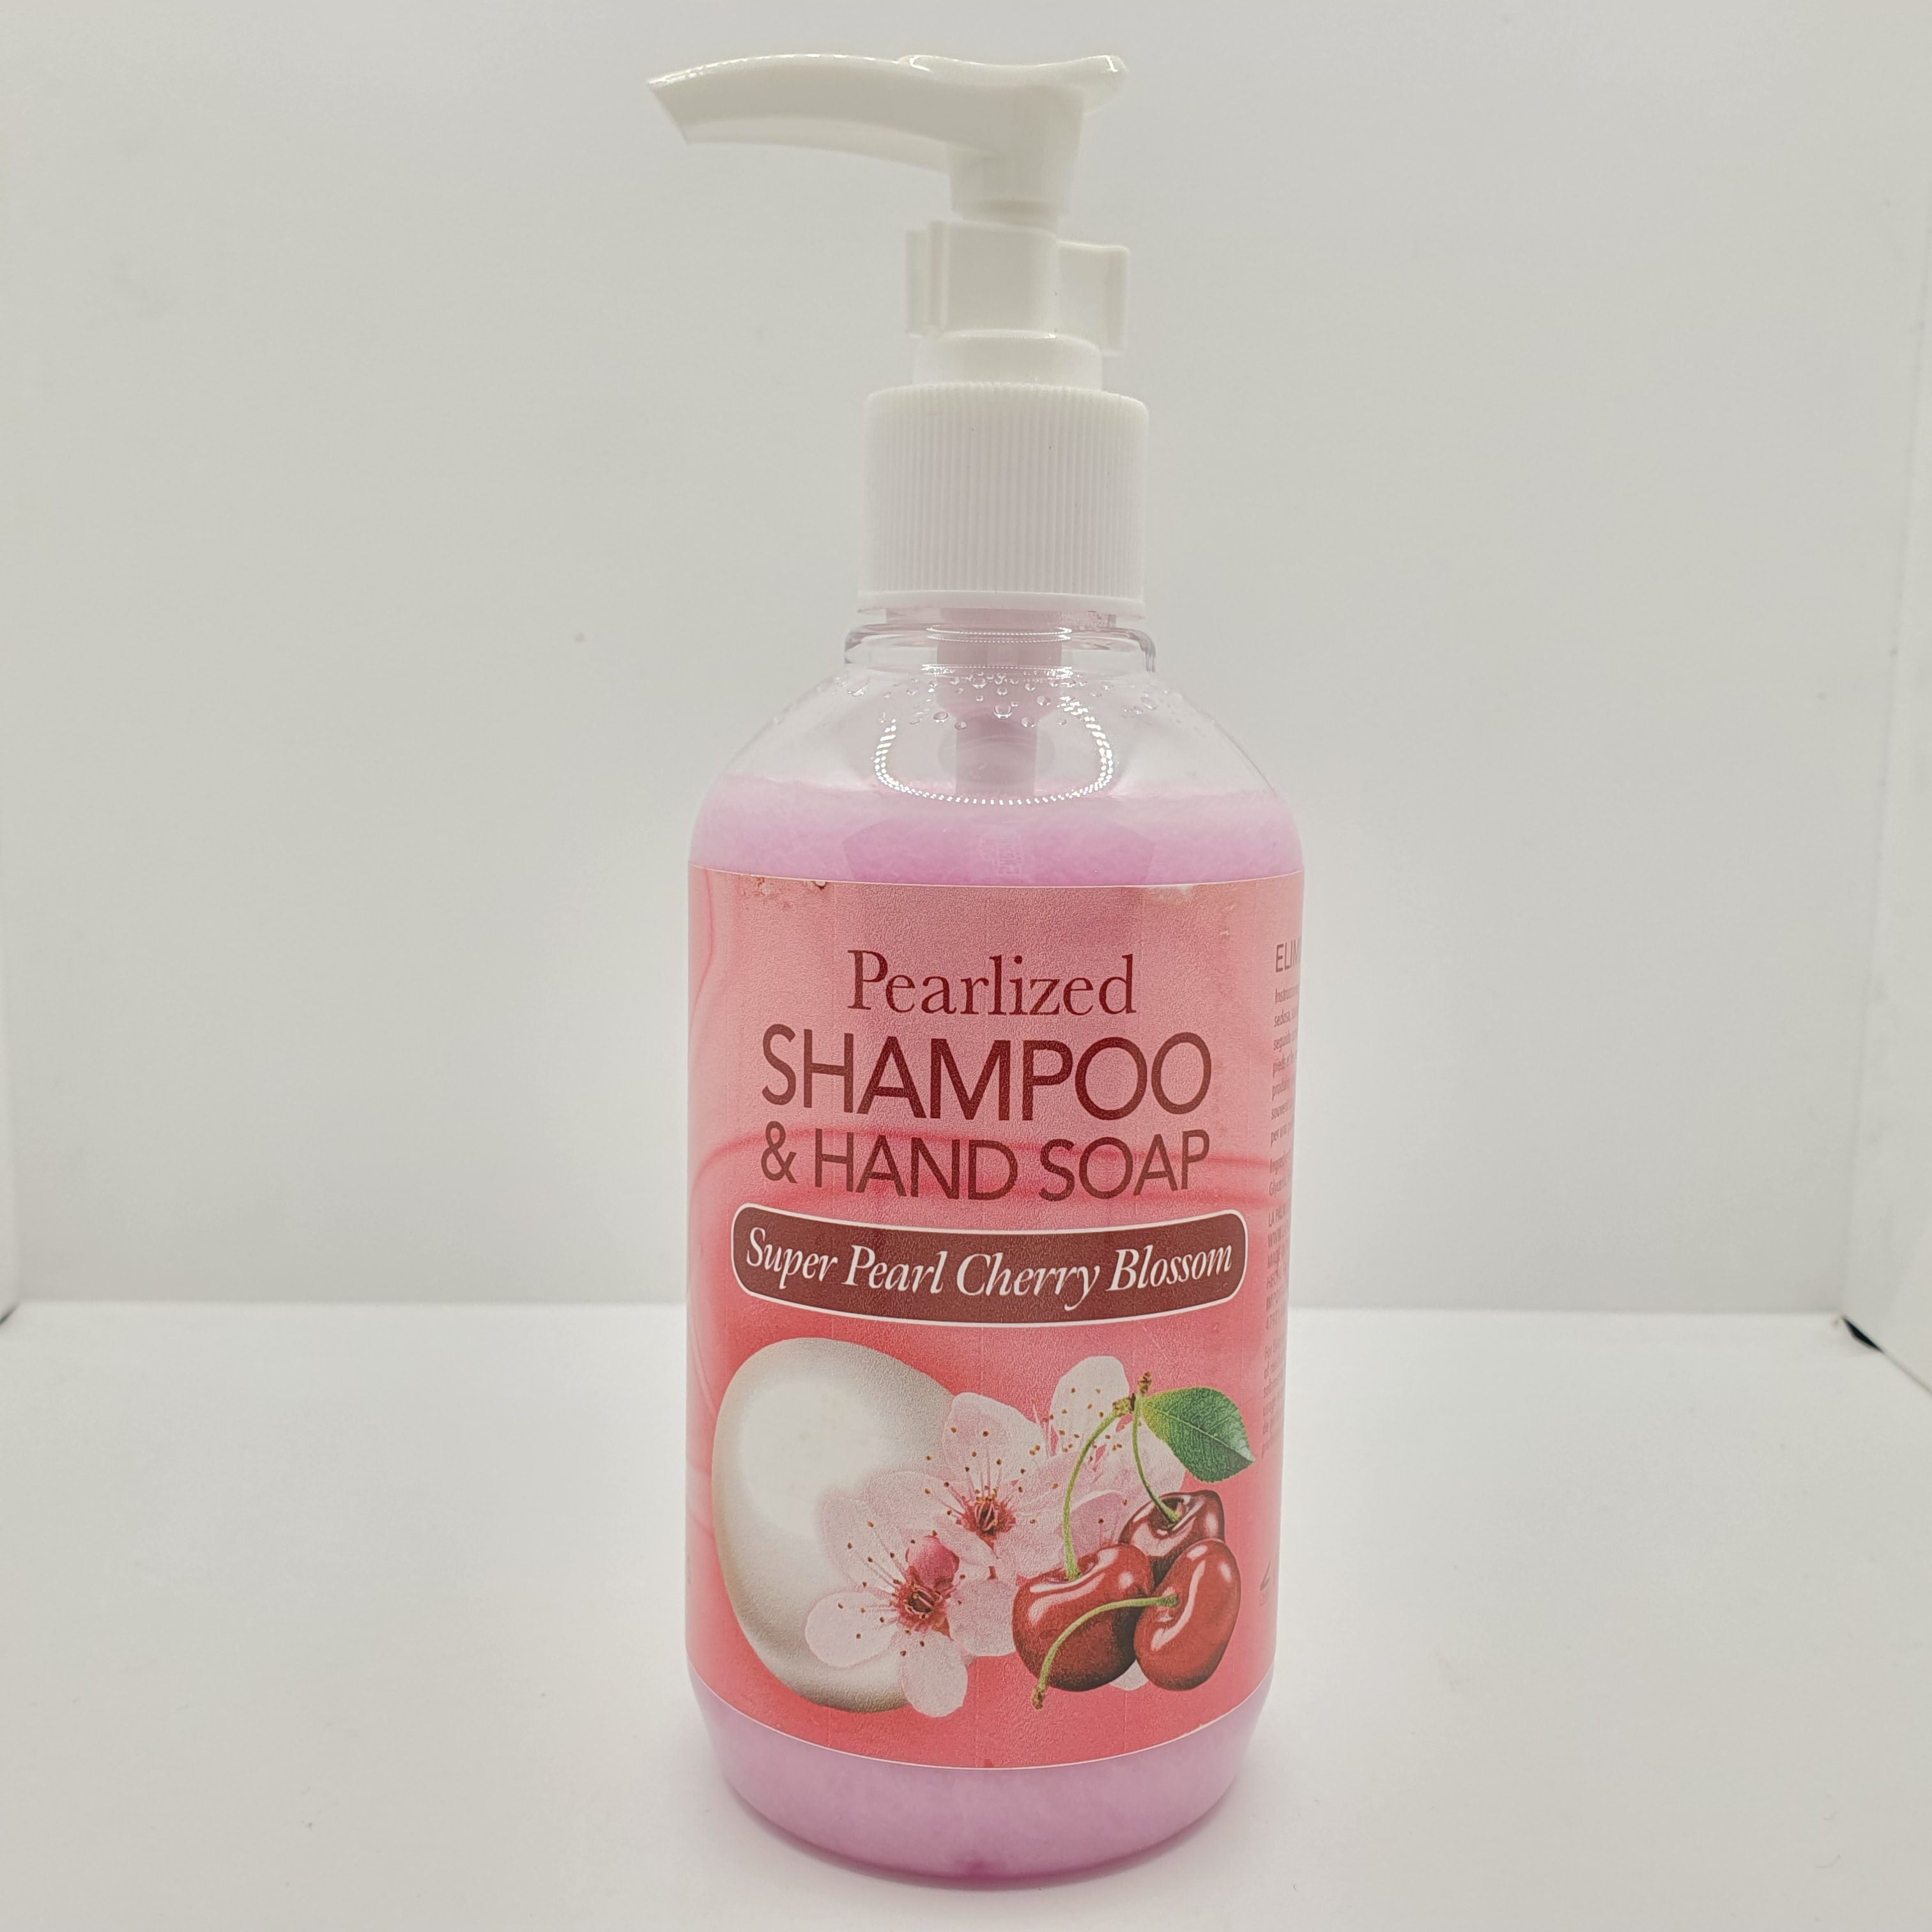 LAPALM SHAMPOO & HAND SOAP - SUPER PEARL CHERRY BLOSSOM - 8 OZ